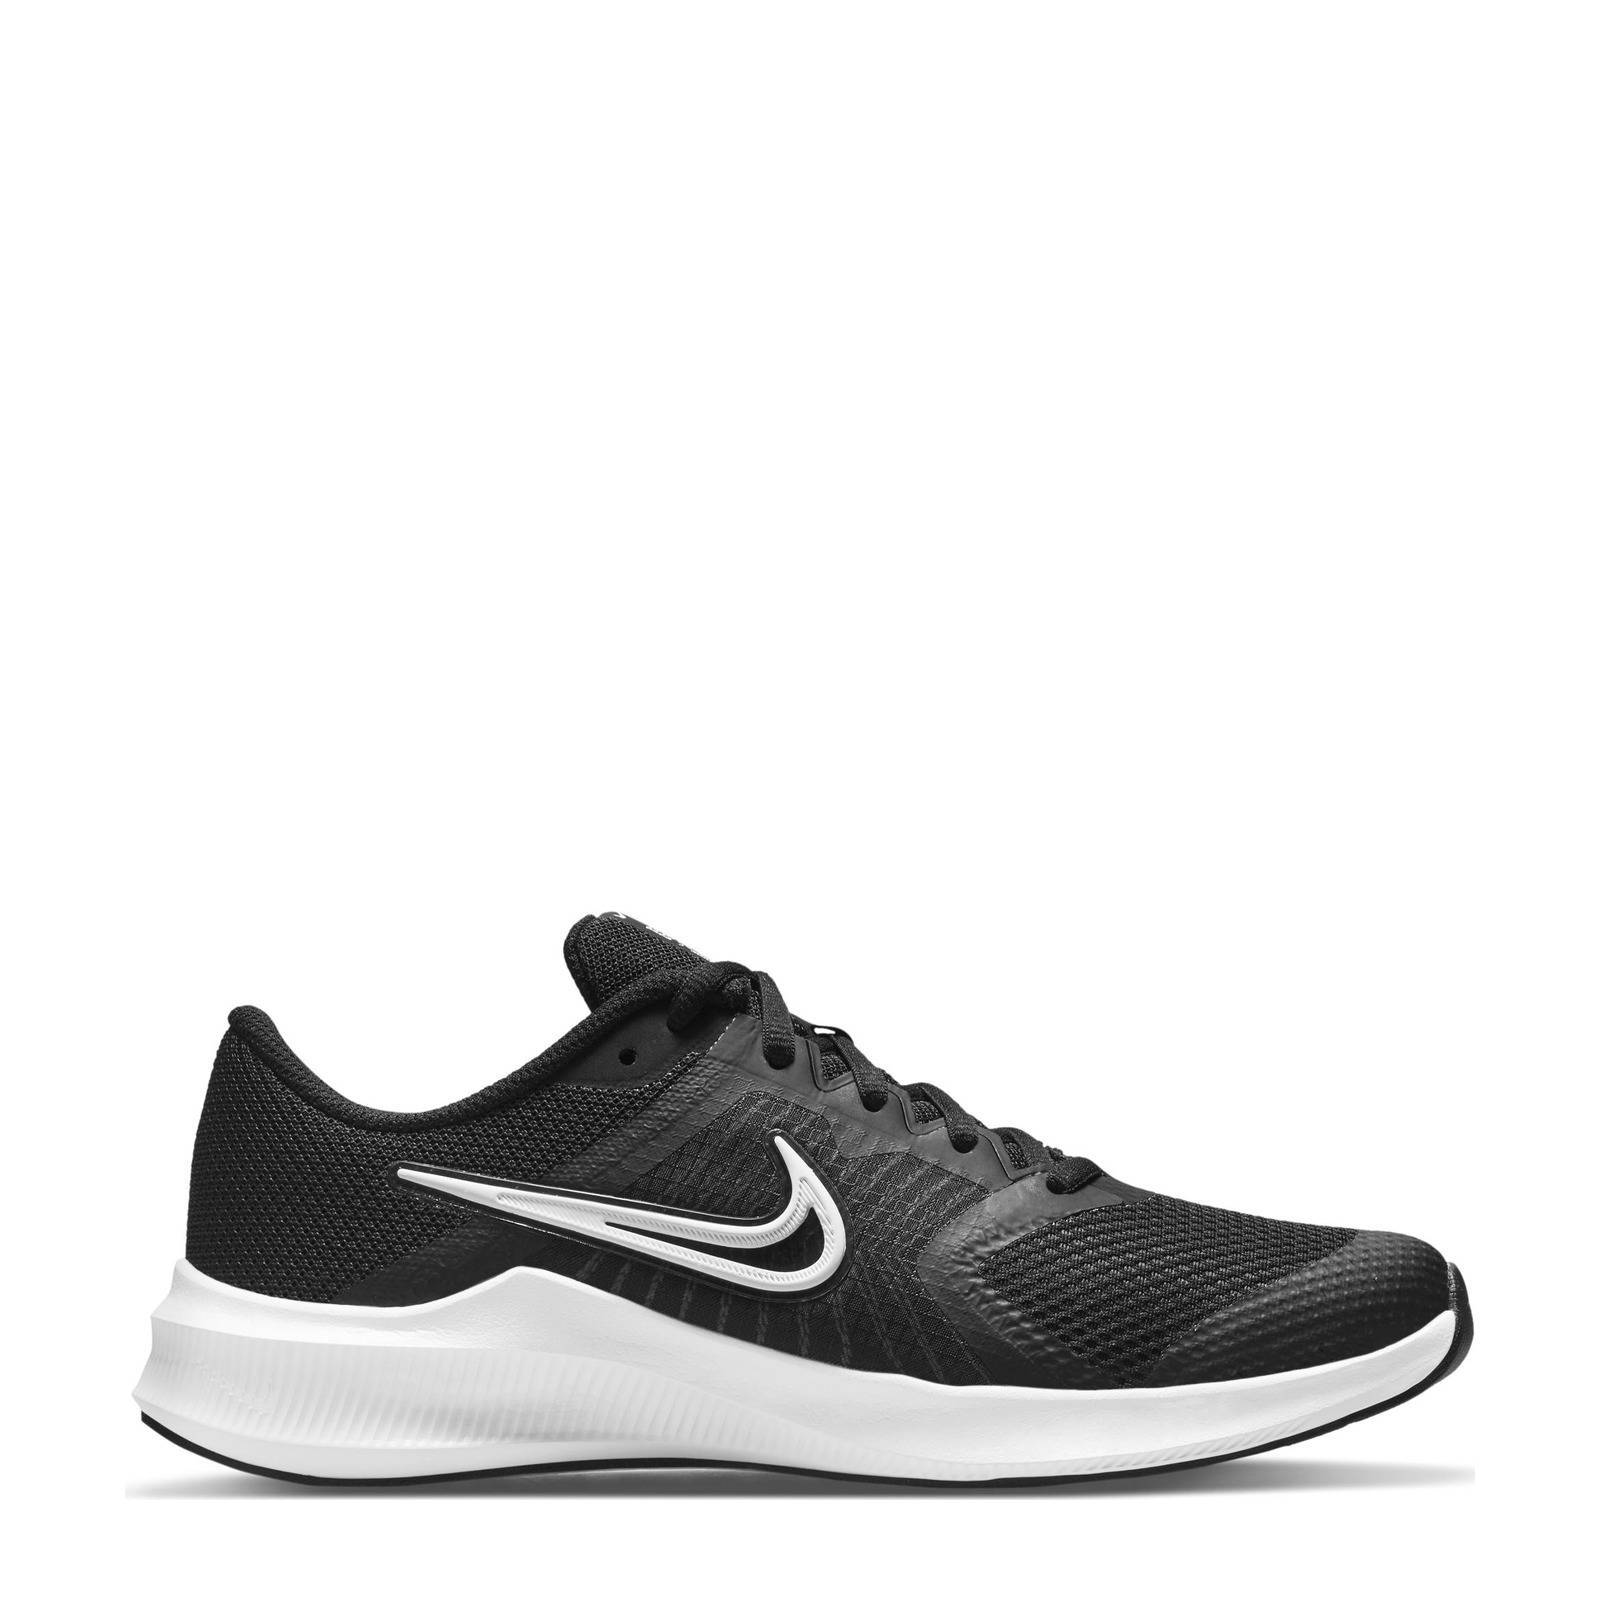 Nike Downshifter 11 hardloopschoenen zwart/wit/grijs online kopen